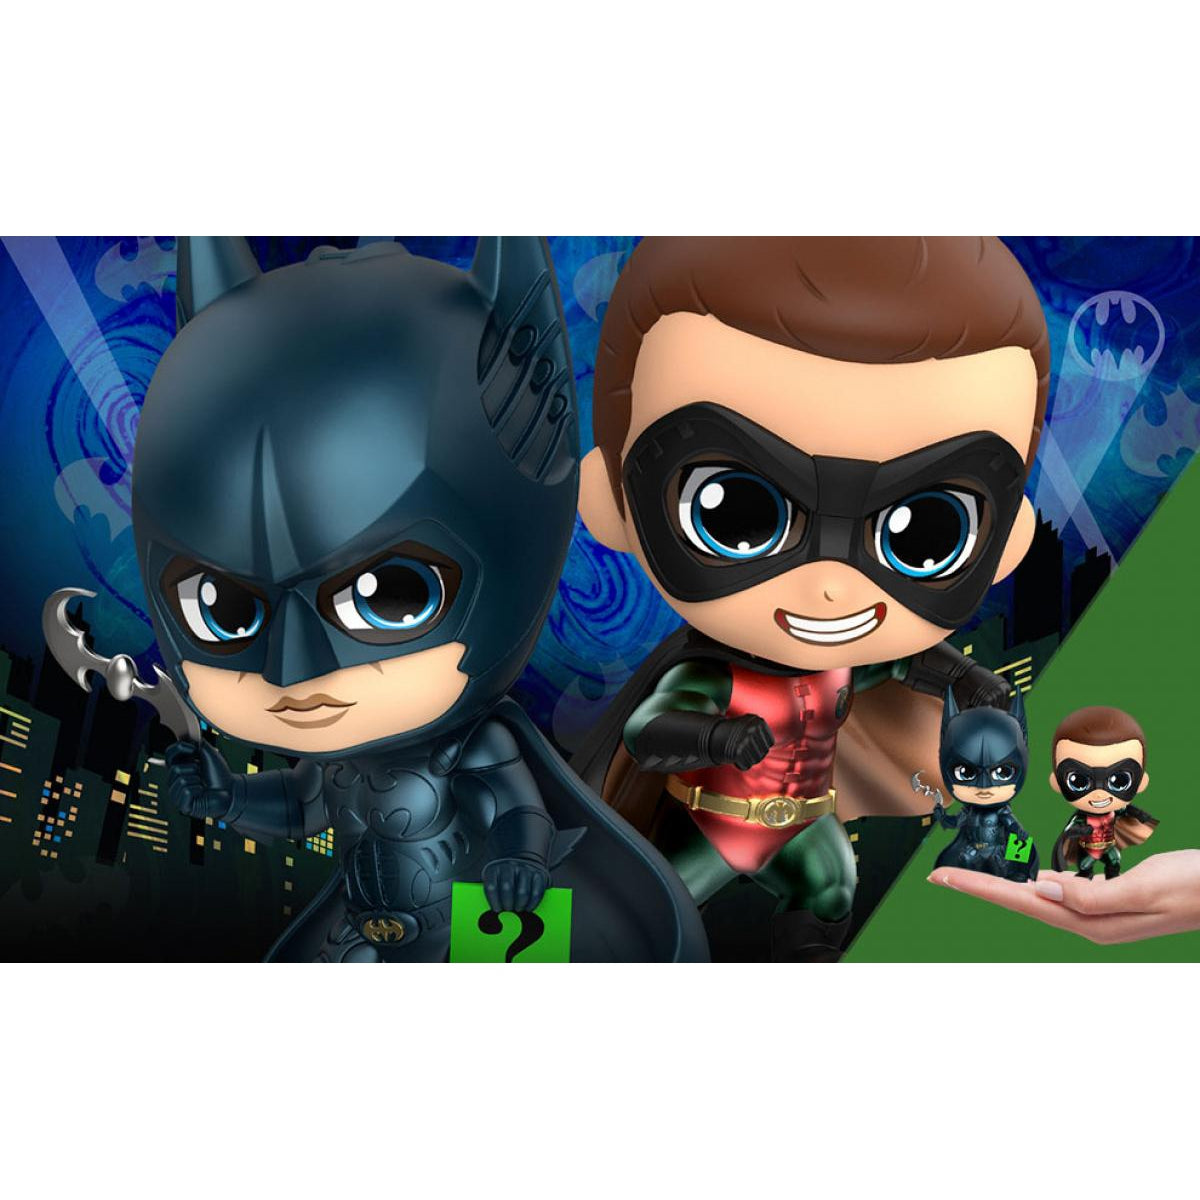 Batman & Robin Cosbaby(s) Collectible Set